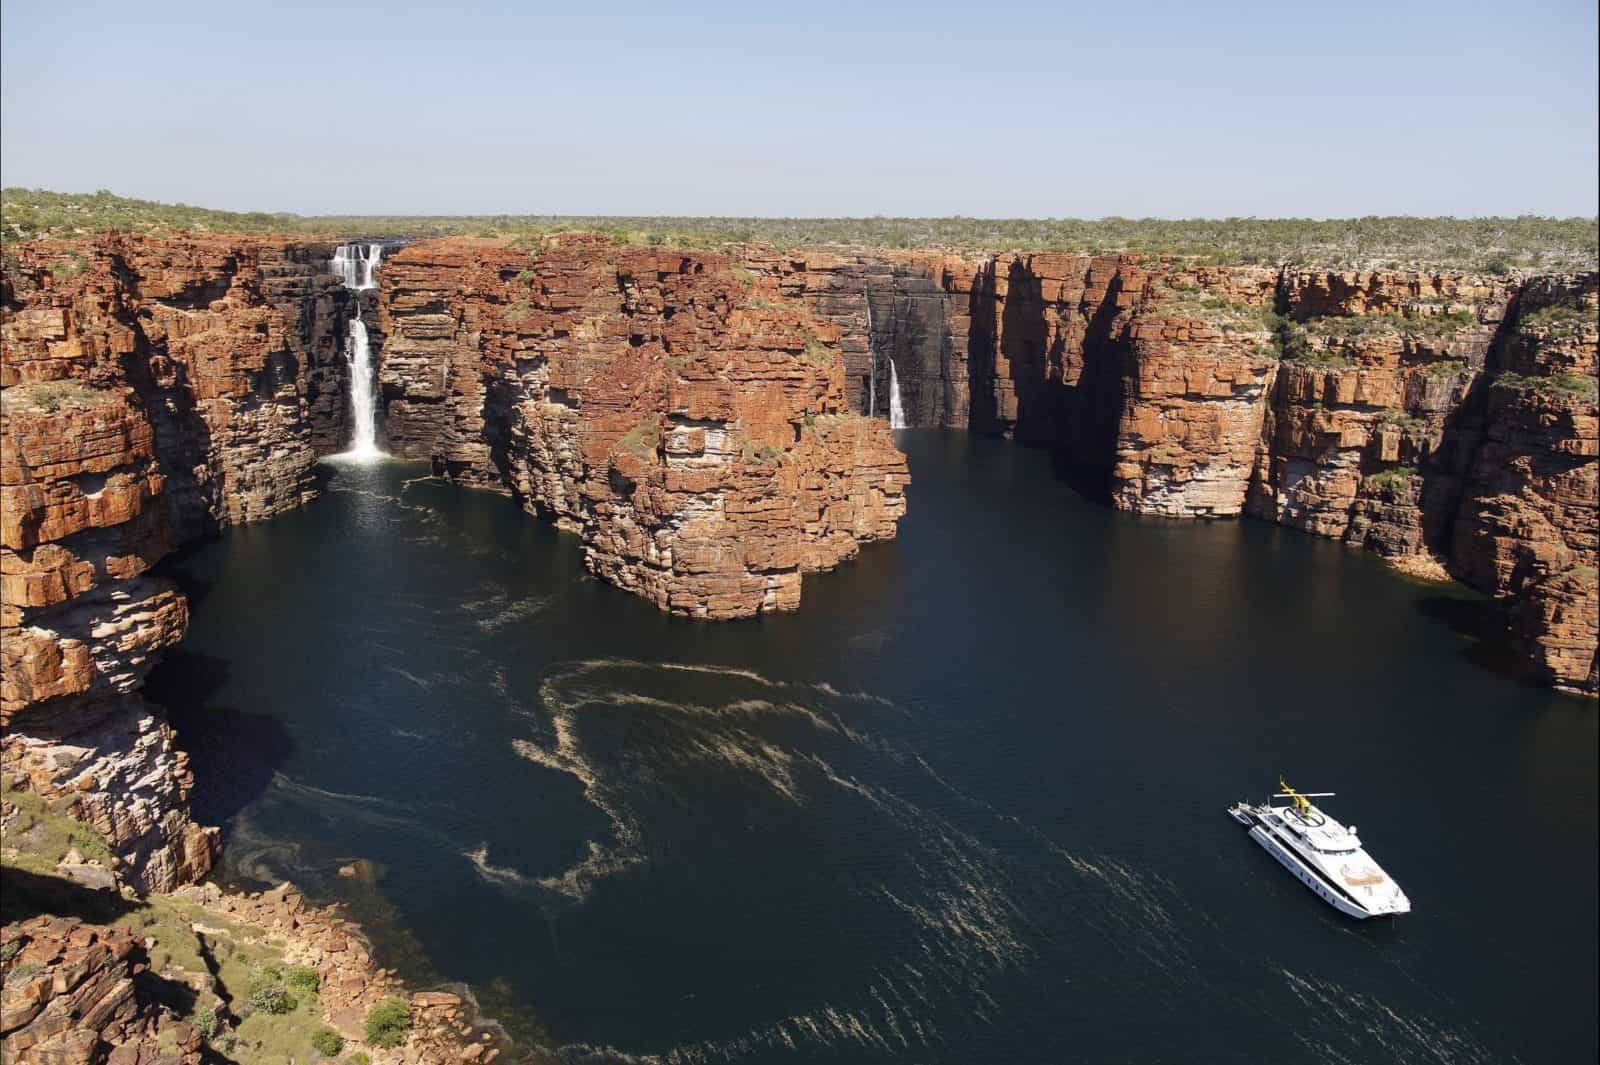 King George Falls, Western Australia